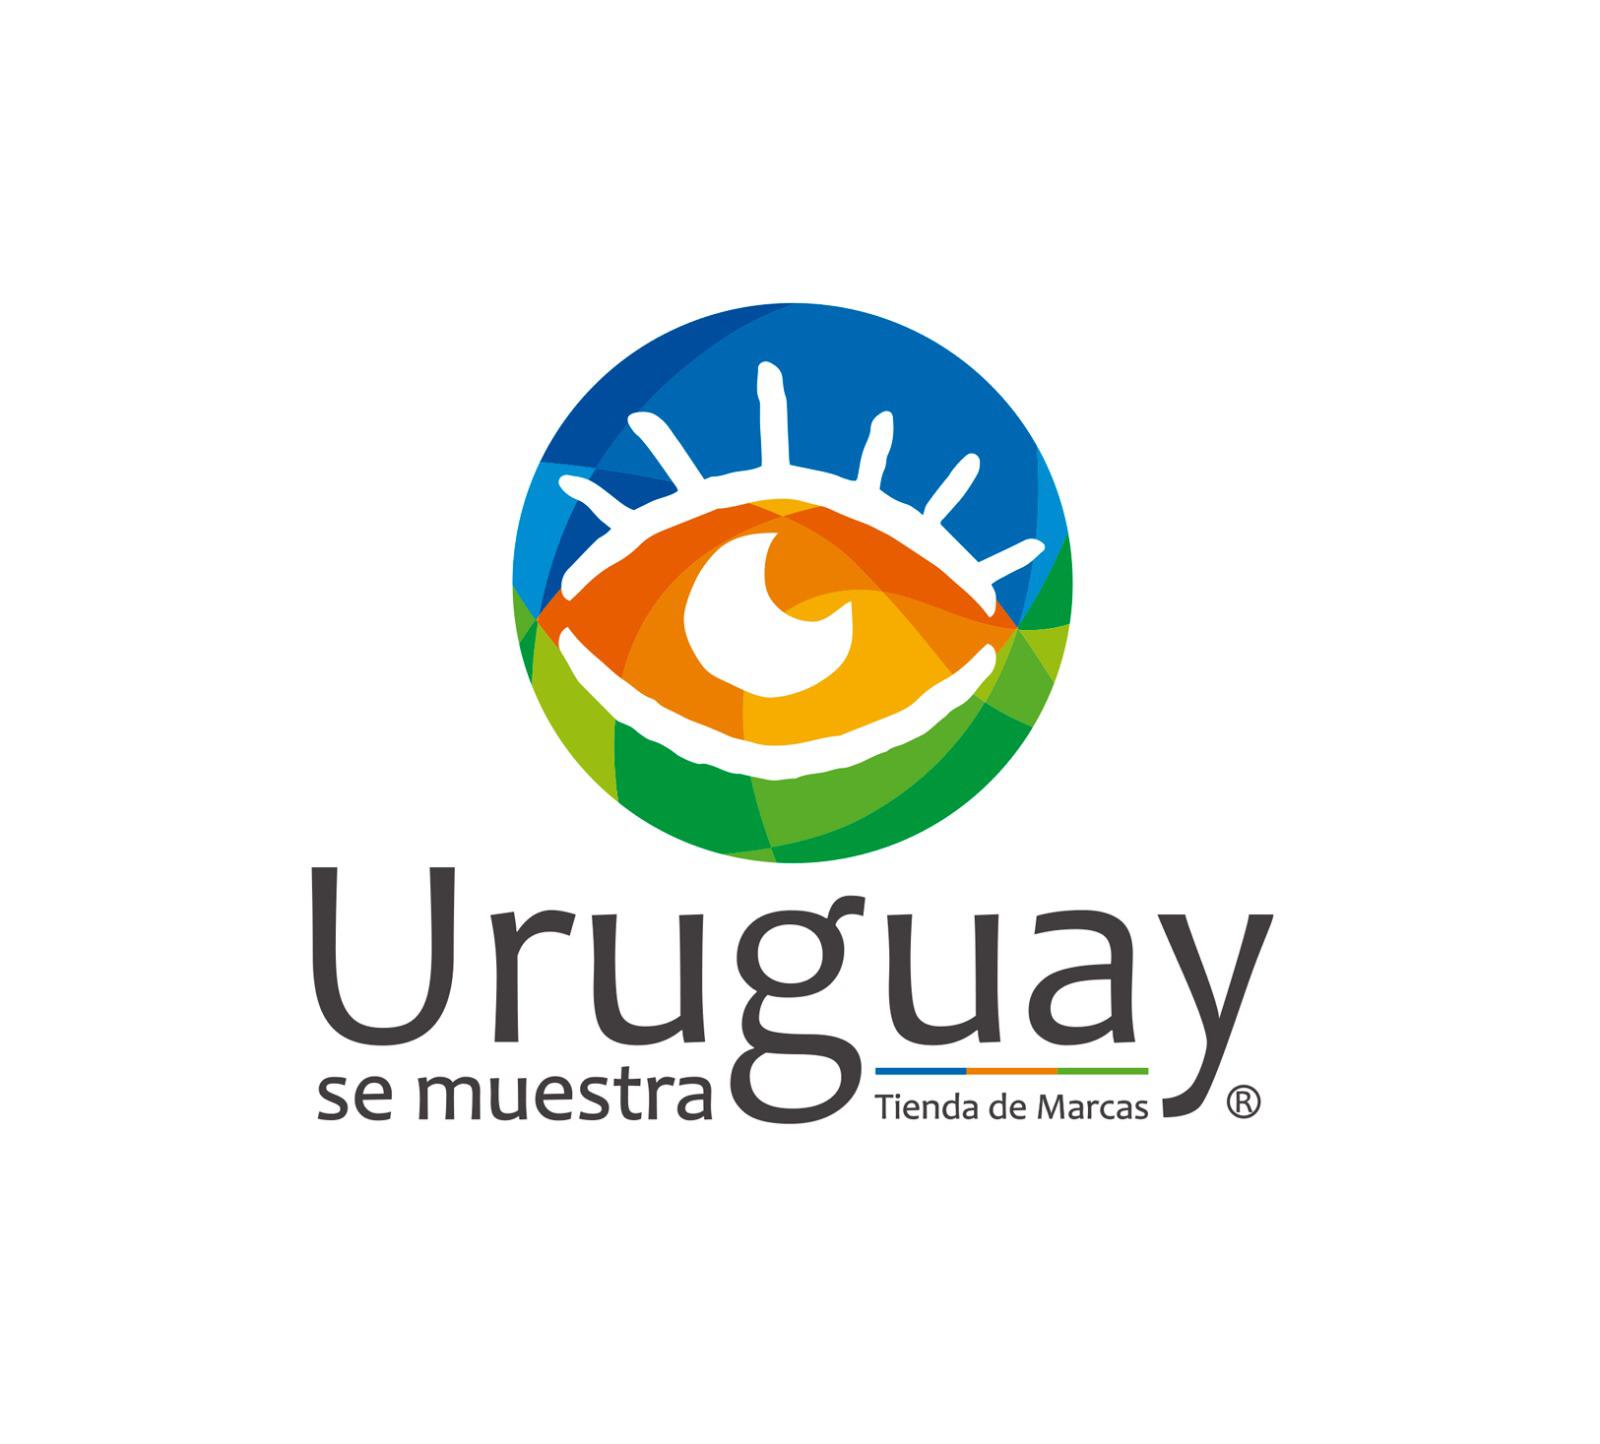 Uruguay se muestra